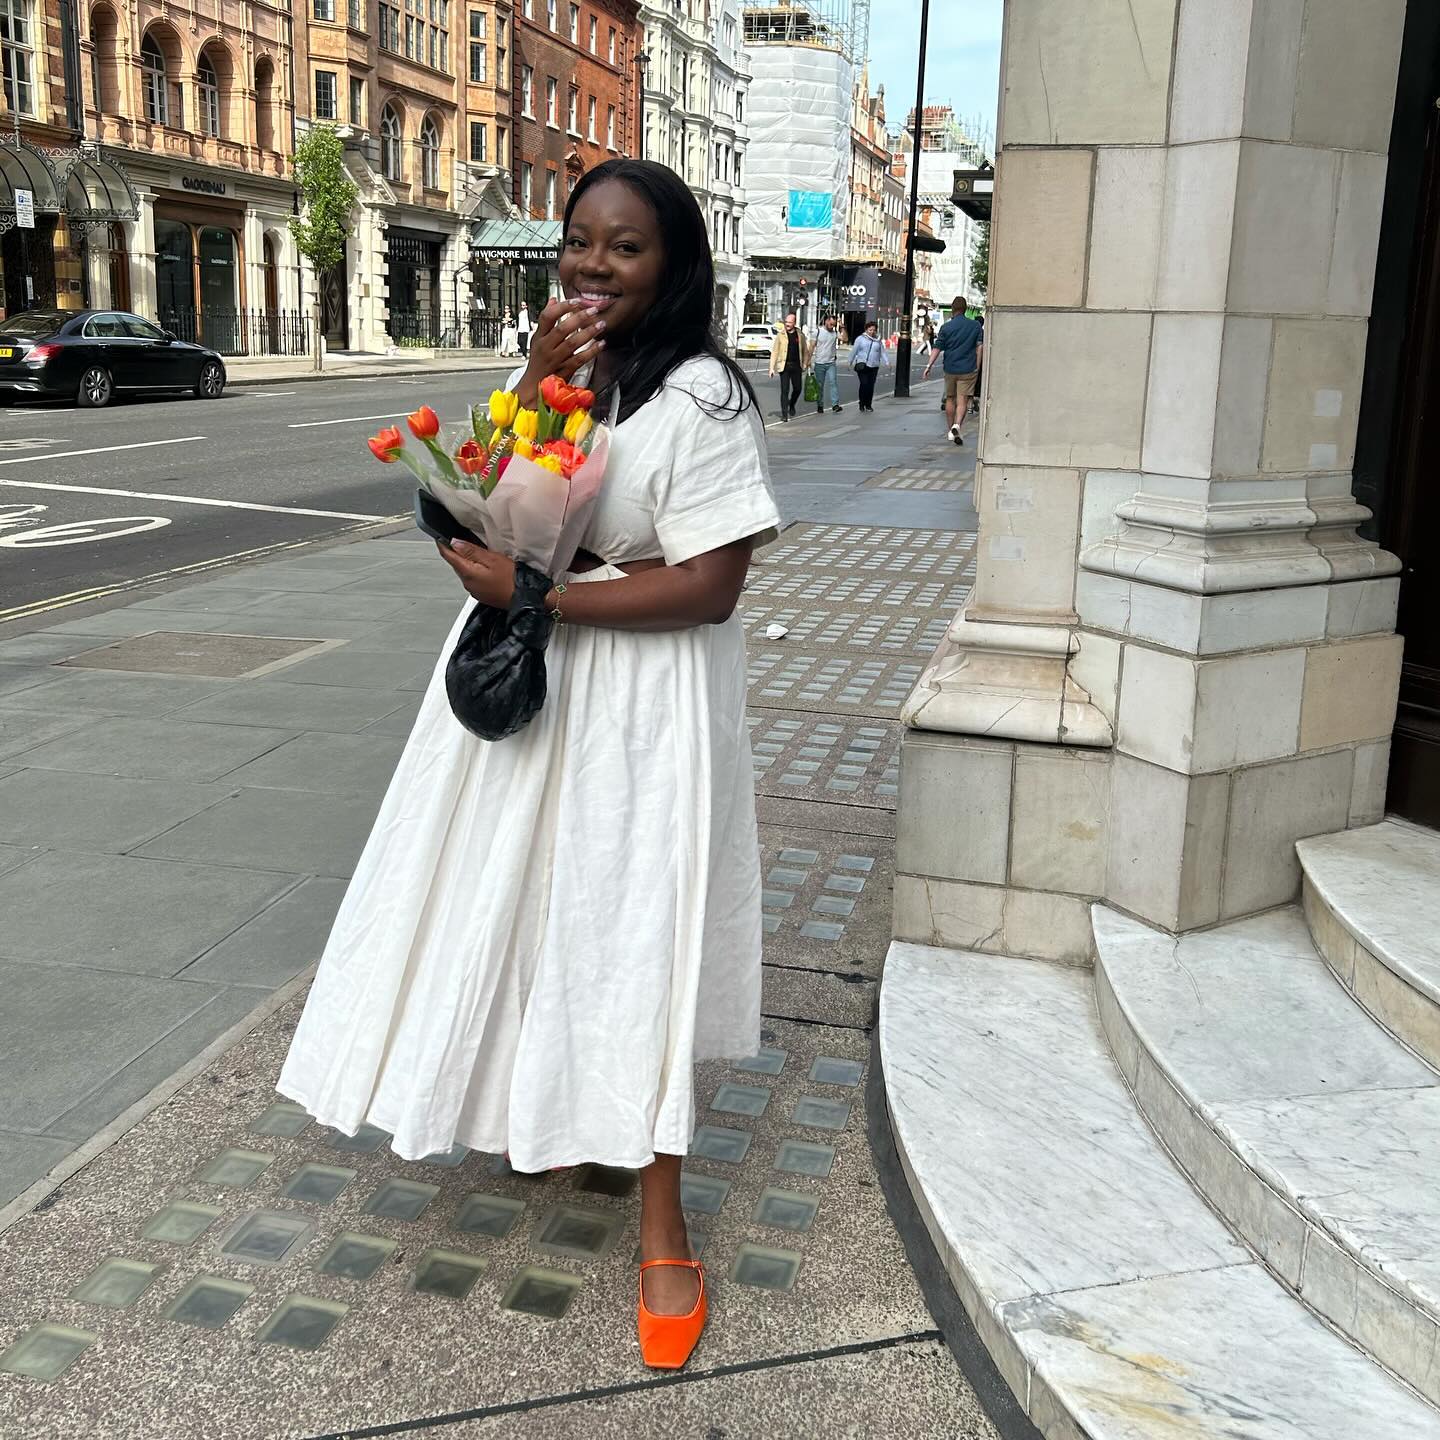 Iman wears short-sleeve white sundress and orange flats while holding a black handbag and flowers